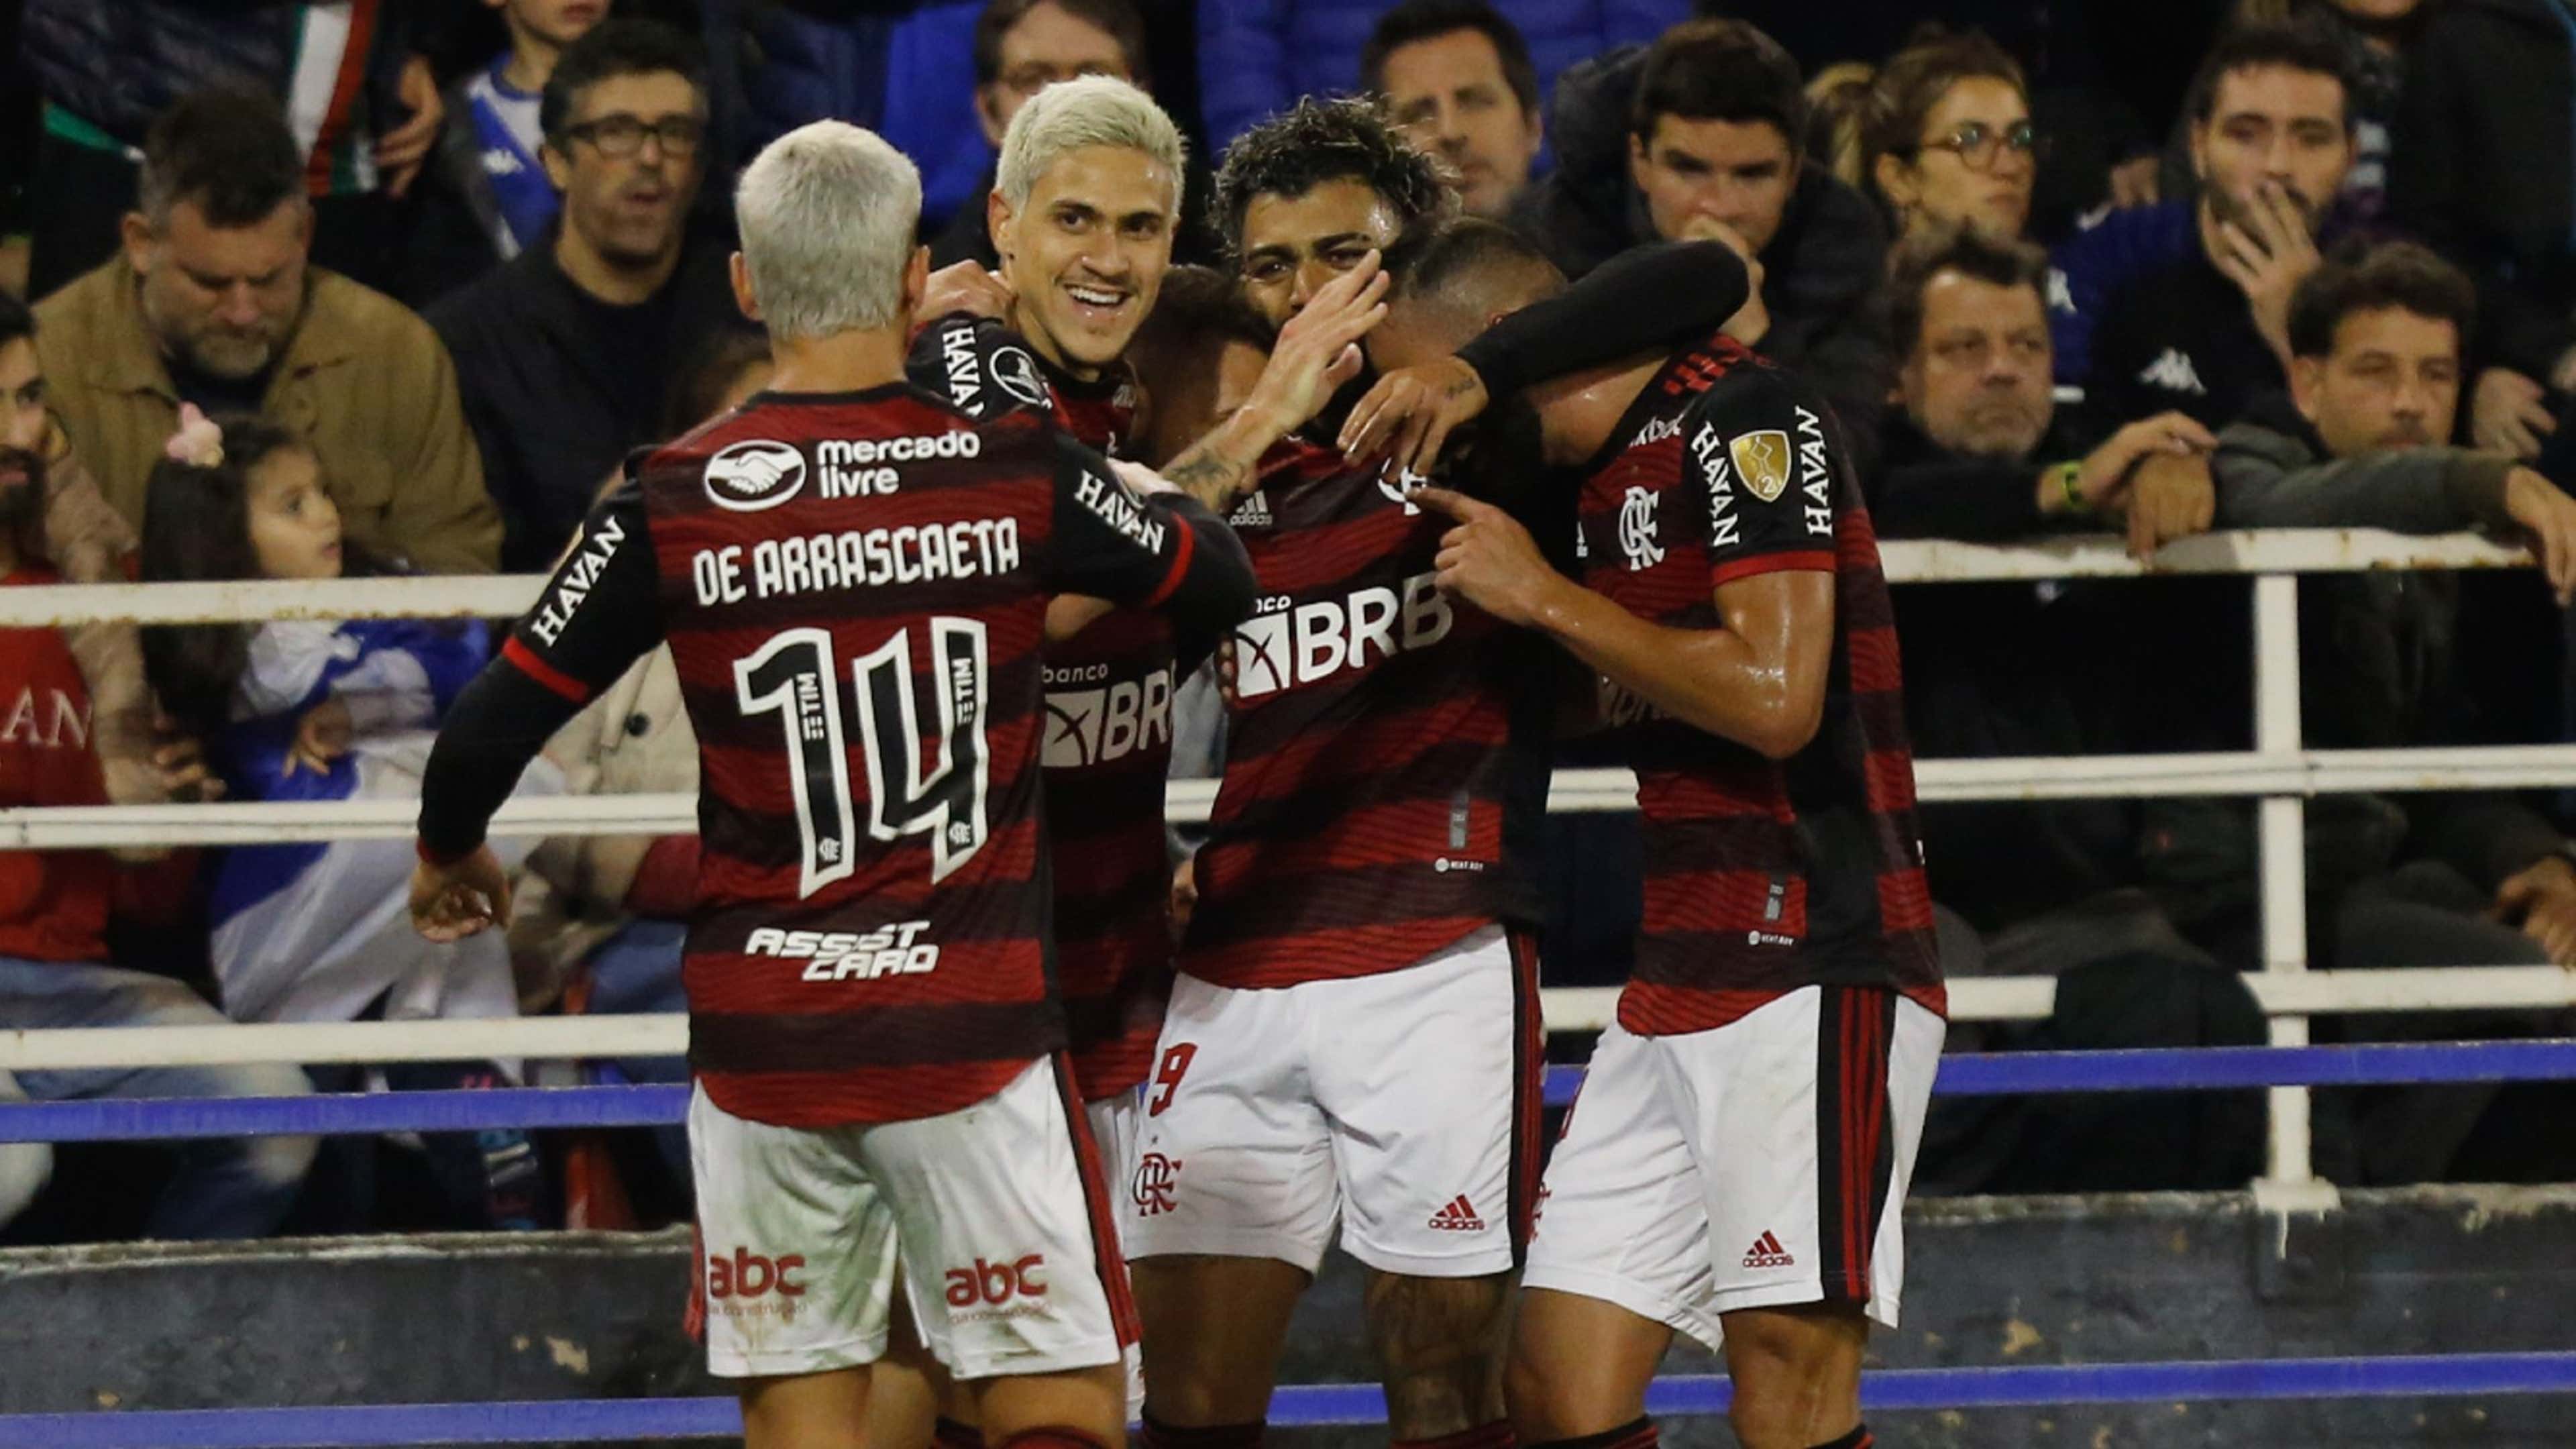 Tombense FC: Rising Star in Brazilian Football